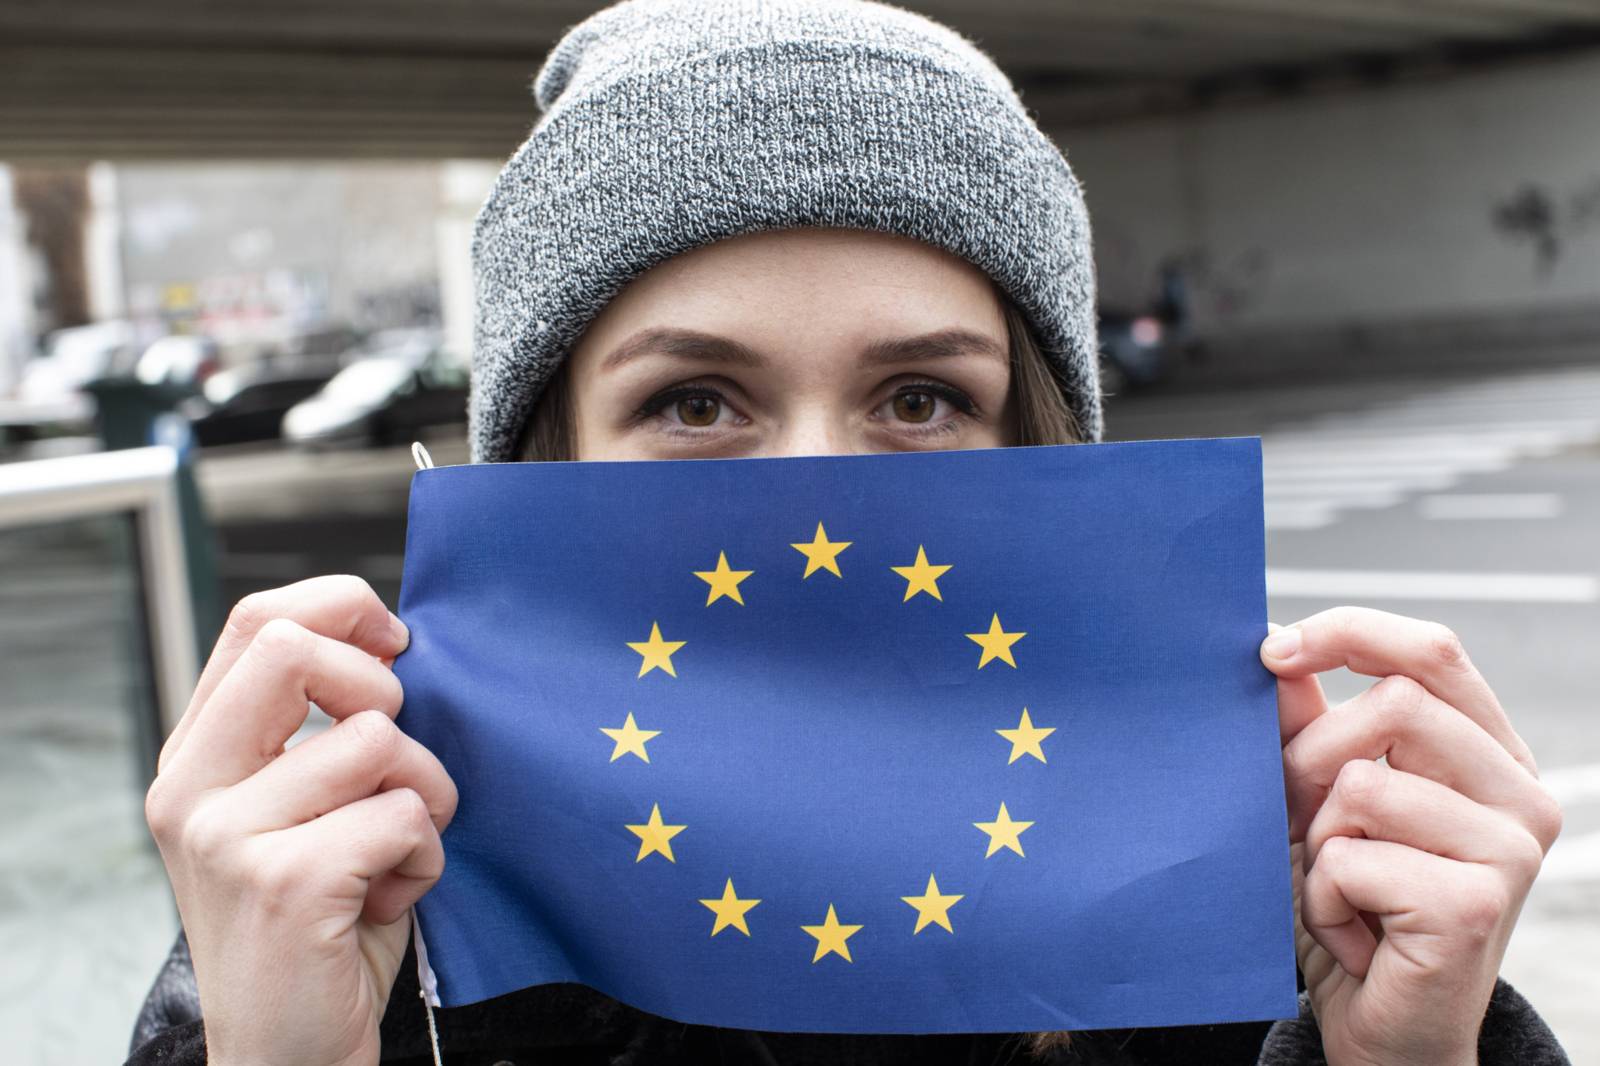 A person holding an EU flag